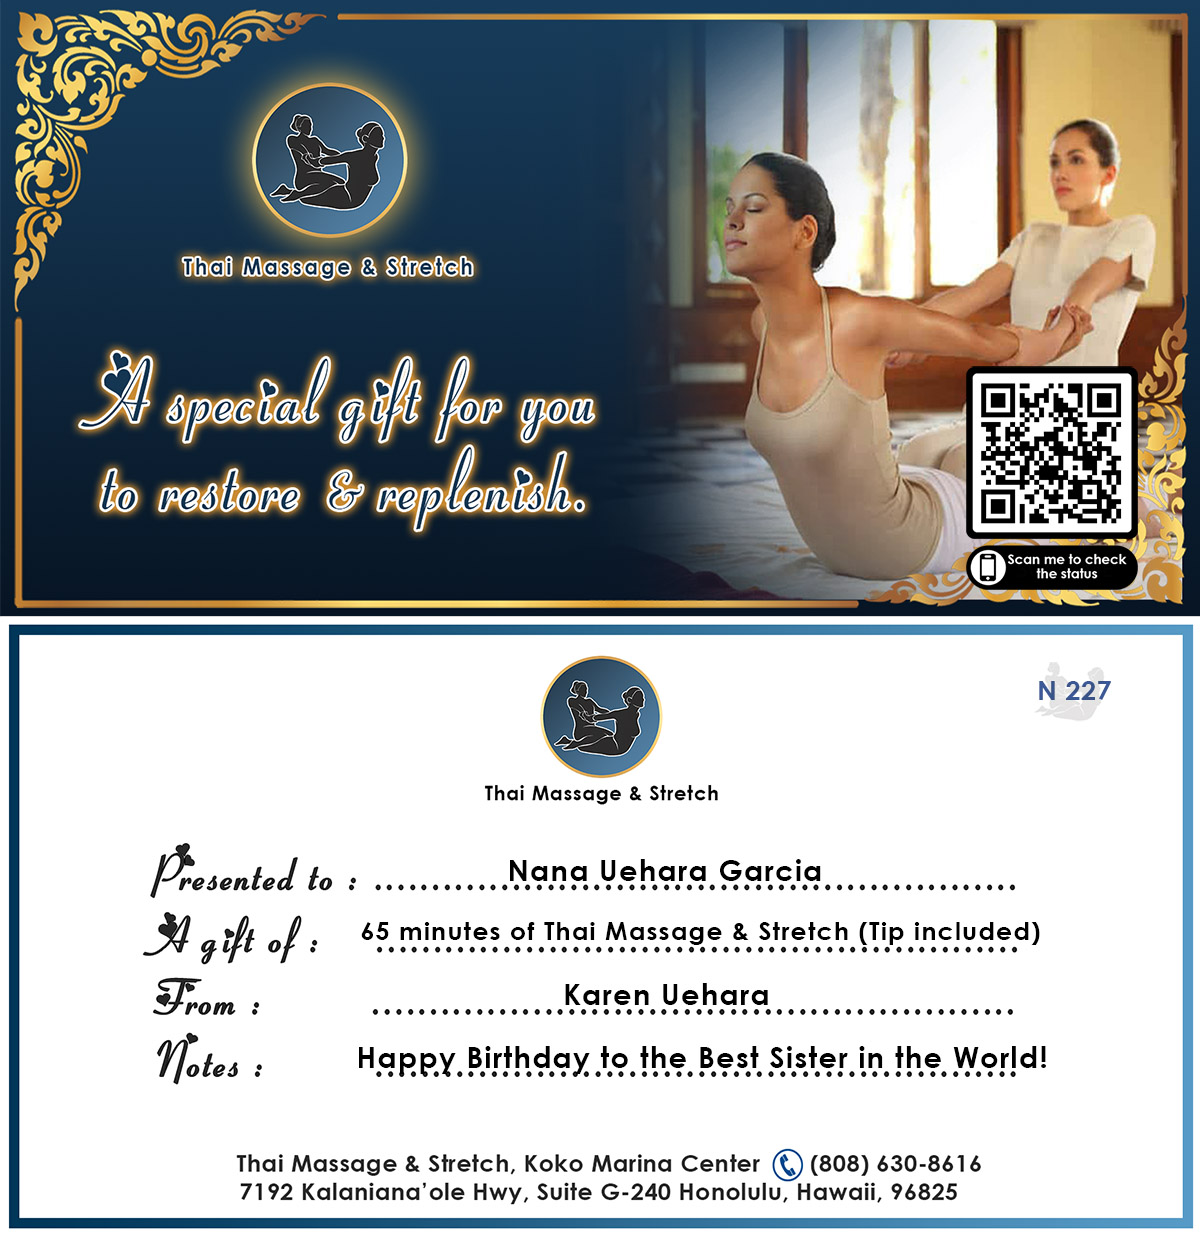 e-Gift Certificate 227 for Nana Uehara Garcia